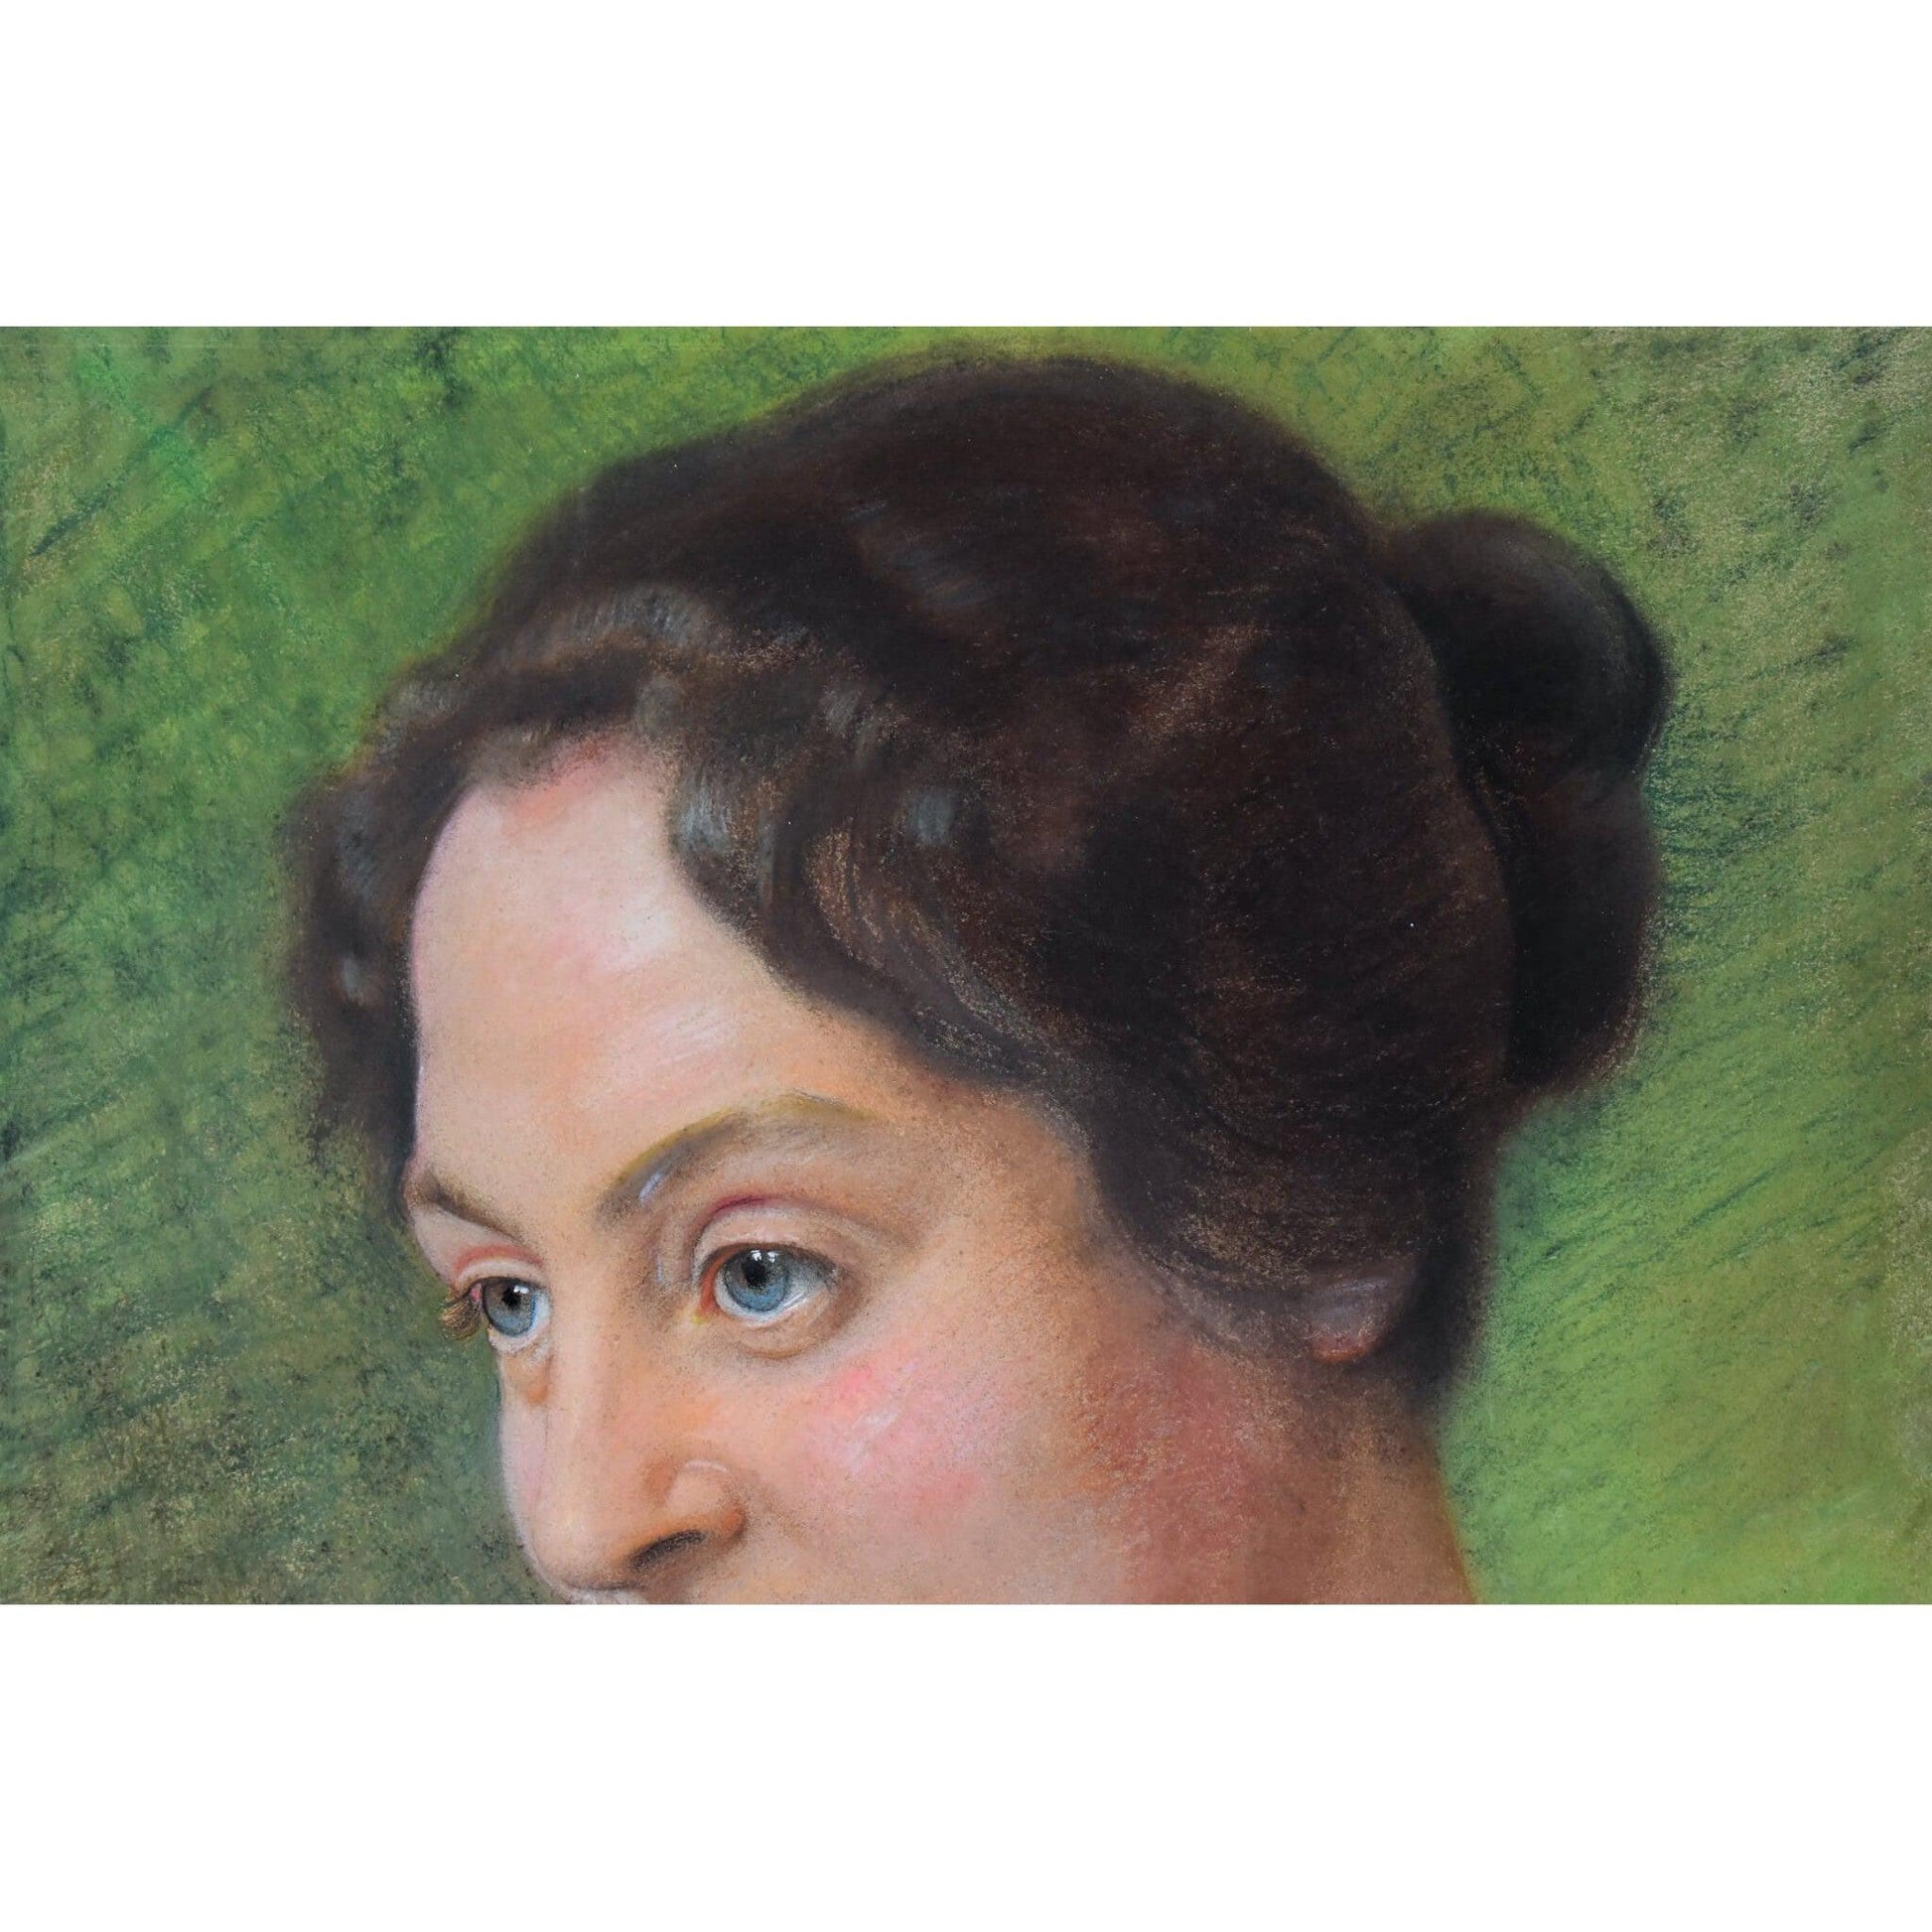 Antique portrait pastel painting woman blue eyes original 1919 by Paul Beckert for sale at Winckelmann Gallery